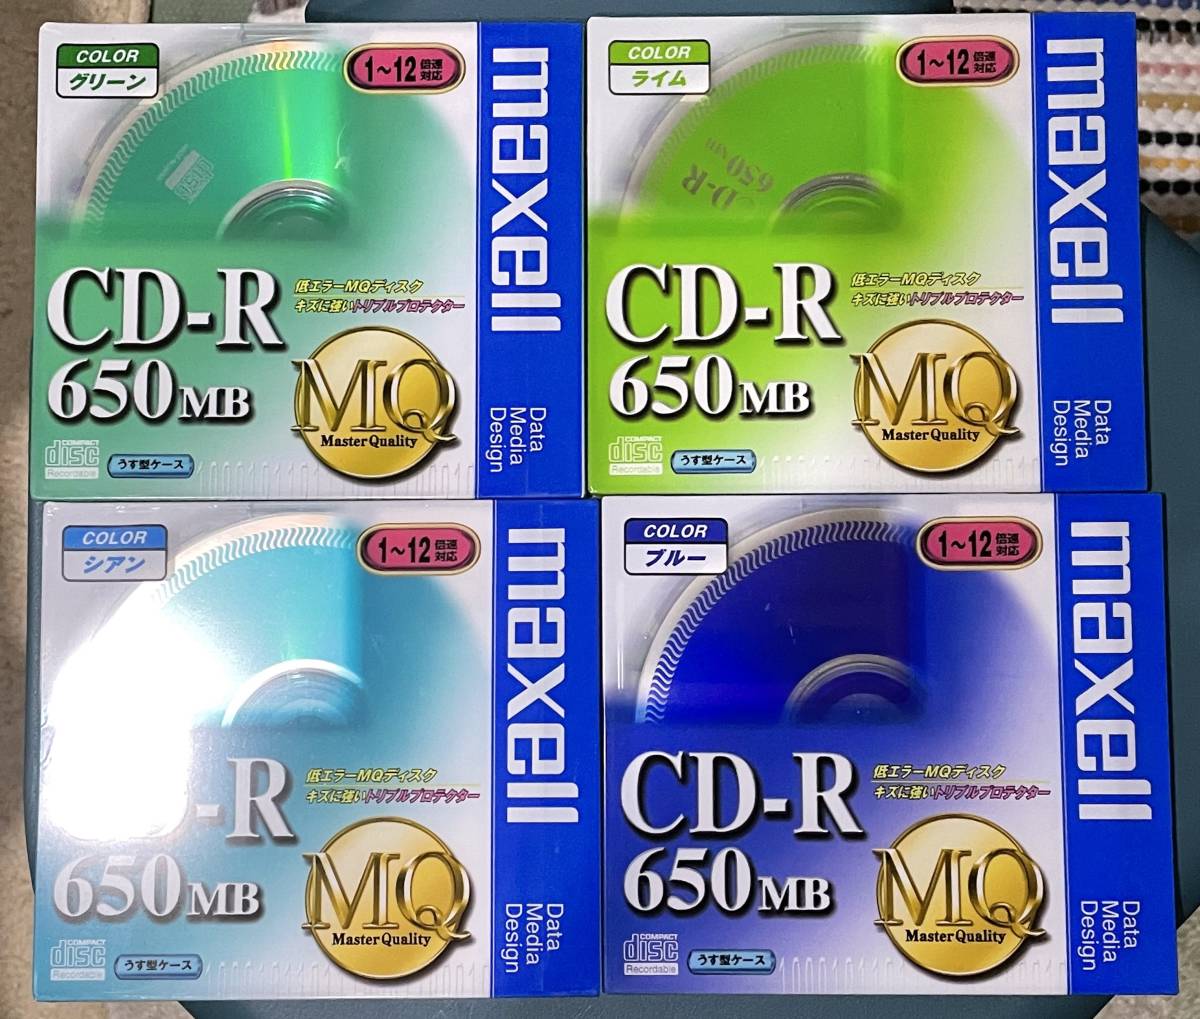 MK3008】CD-R 大量セット 新品 品 SONY maxell dclnigeria.com